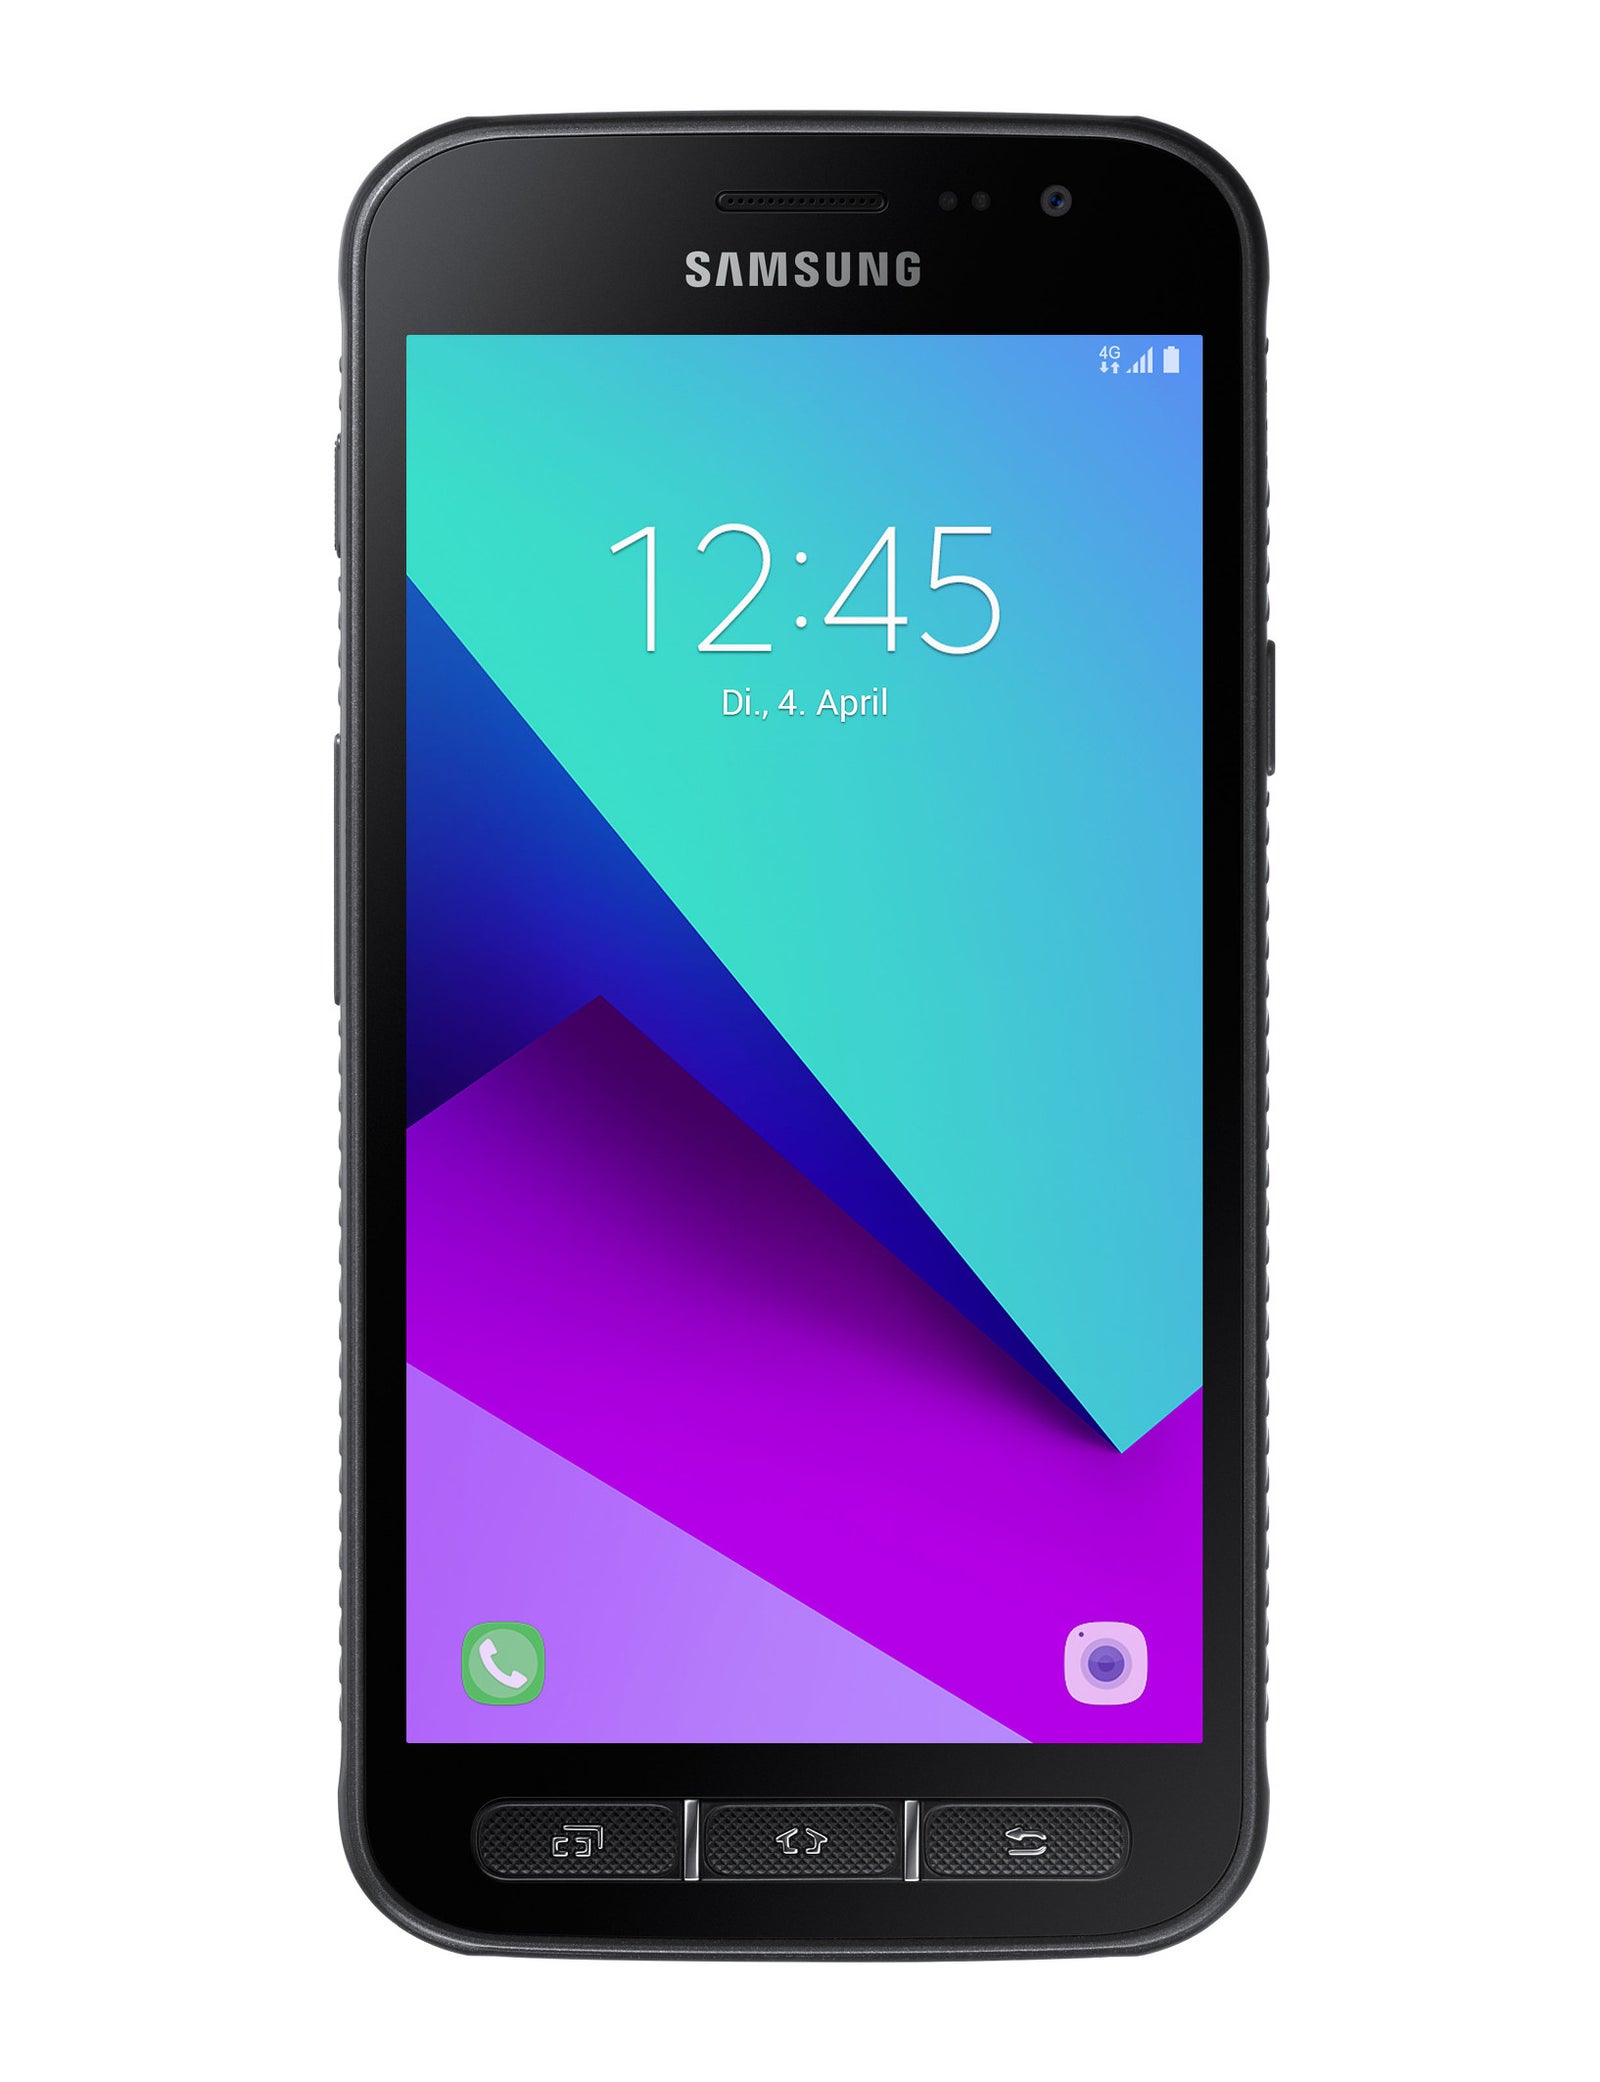 Samsung Galaxy Xcover 4 specs PhoneArena